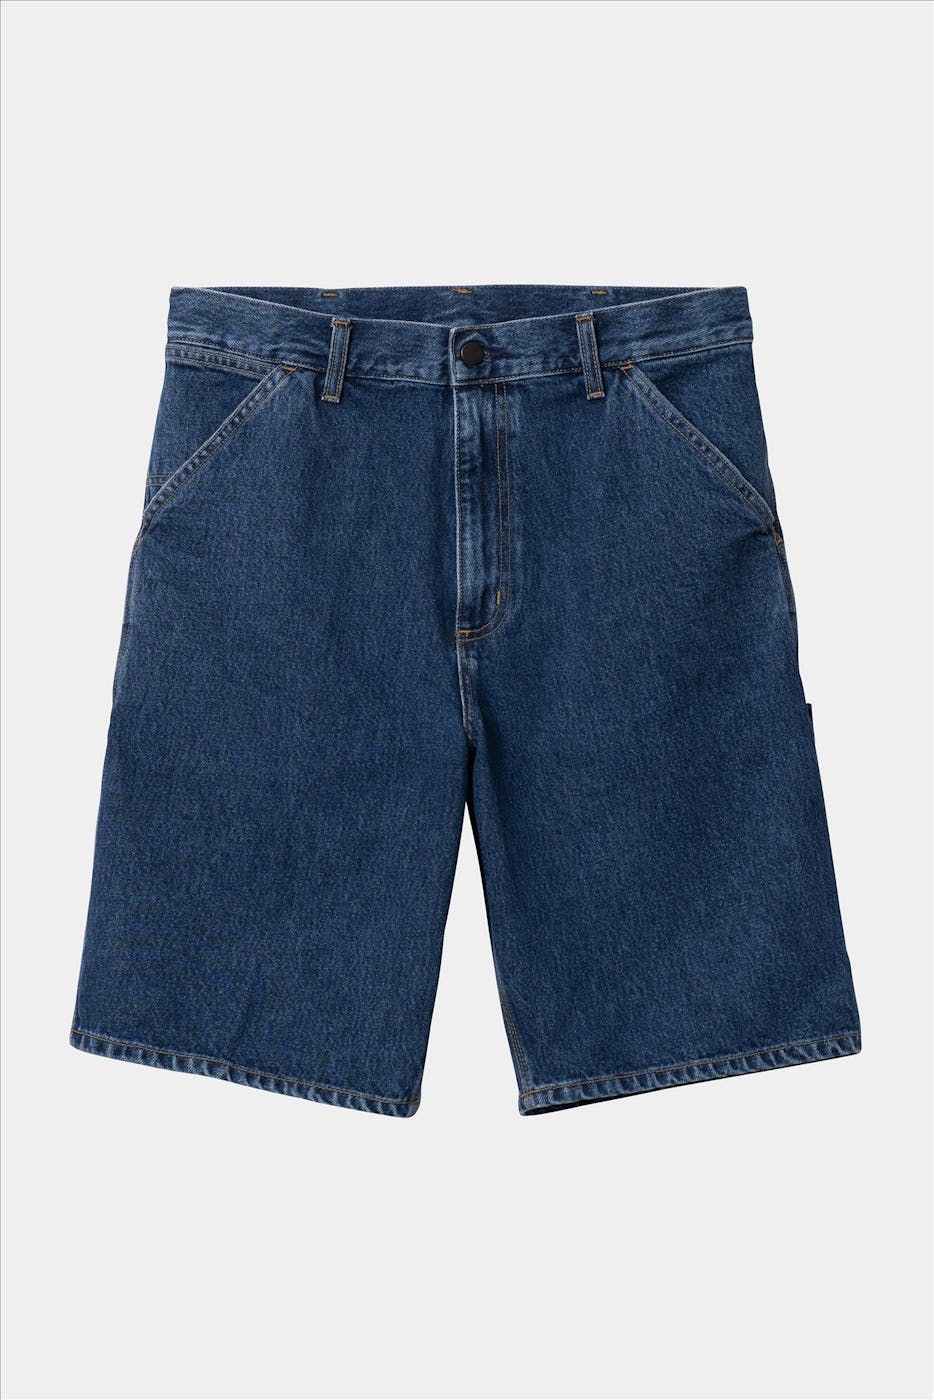 Carhartt WIP - Donkerblauwe Single Knee jeansshort